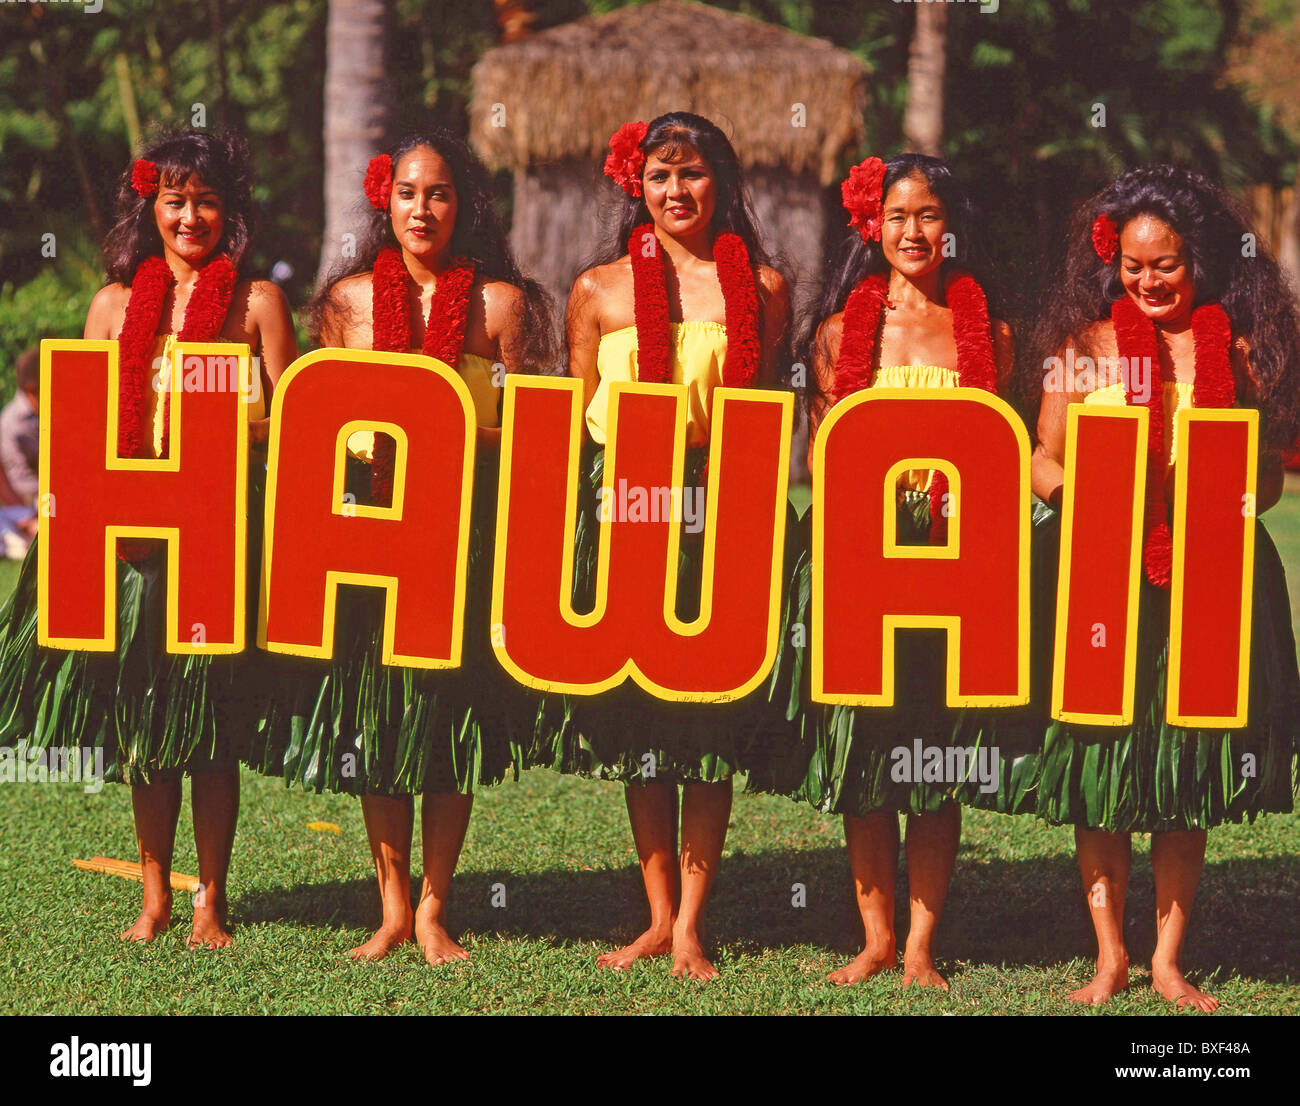 Hawaiian dancers holding 'Hawaii' sign, Kodak Hula Show, Honolulu, Oahu, Hawaii, United States of America Stock Photo